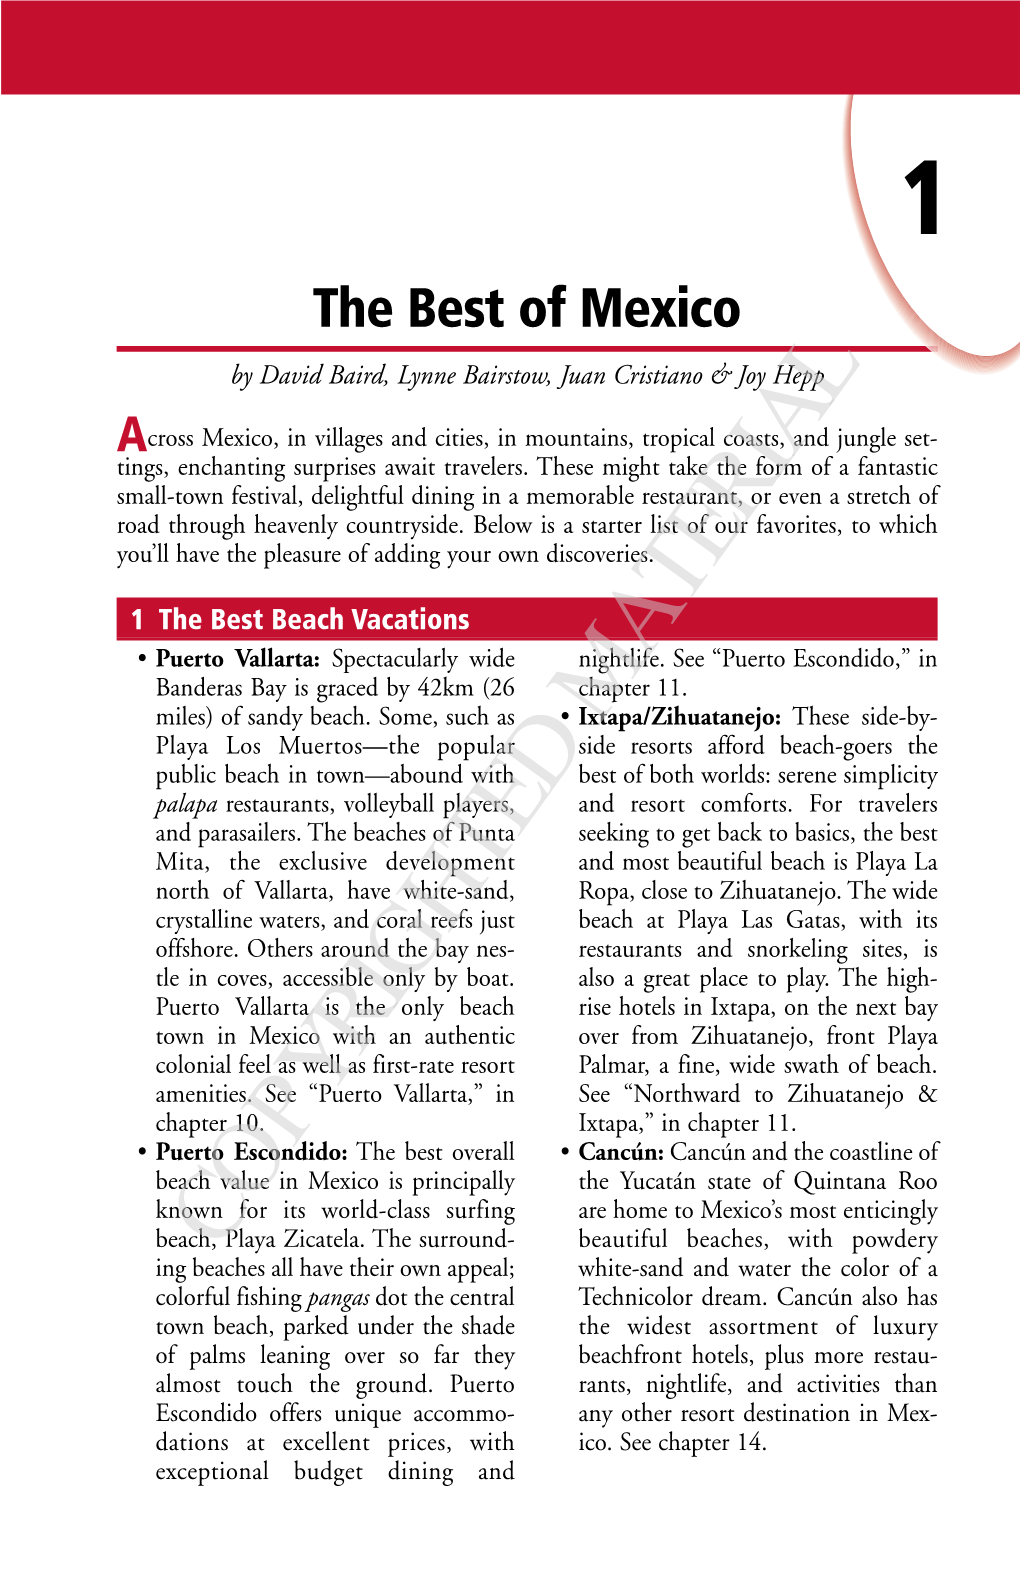 The Best of Mexico by David Baird, Lynne Bairstow, Juan Cristiano & Joy Hepp